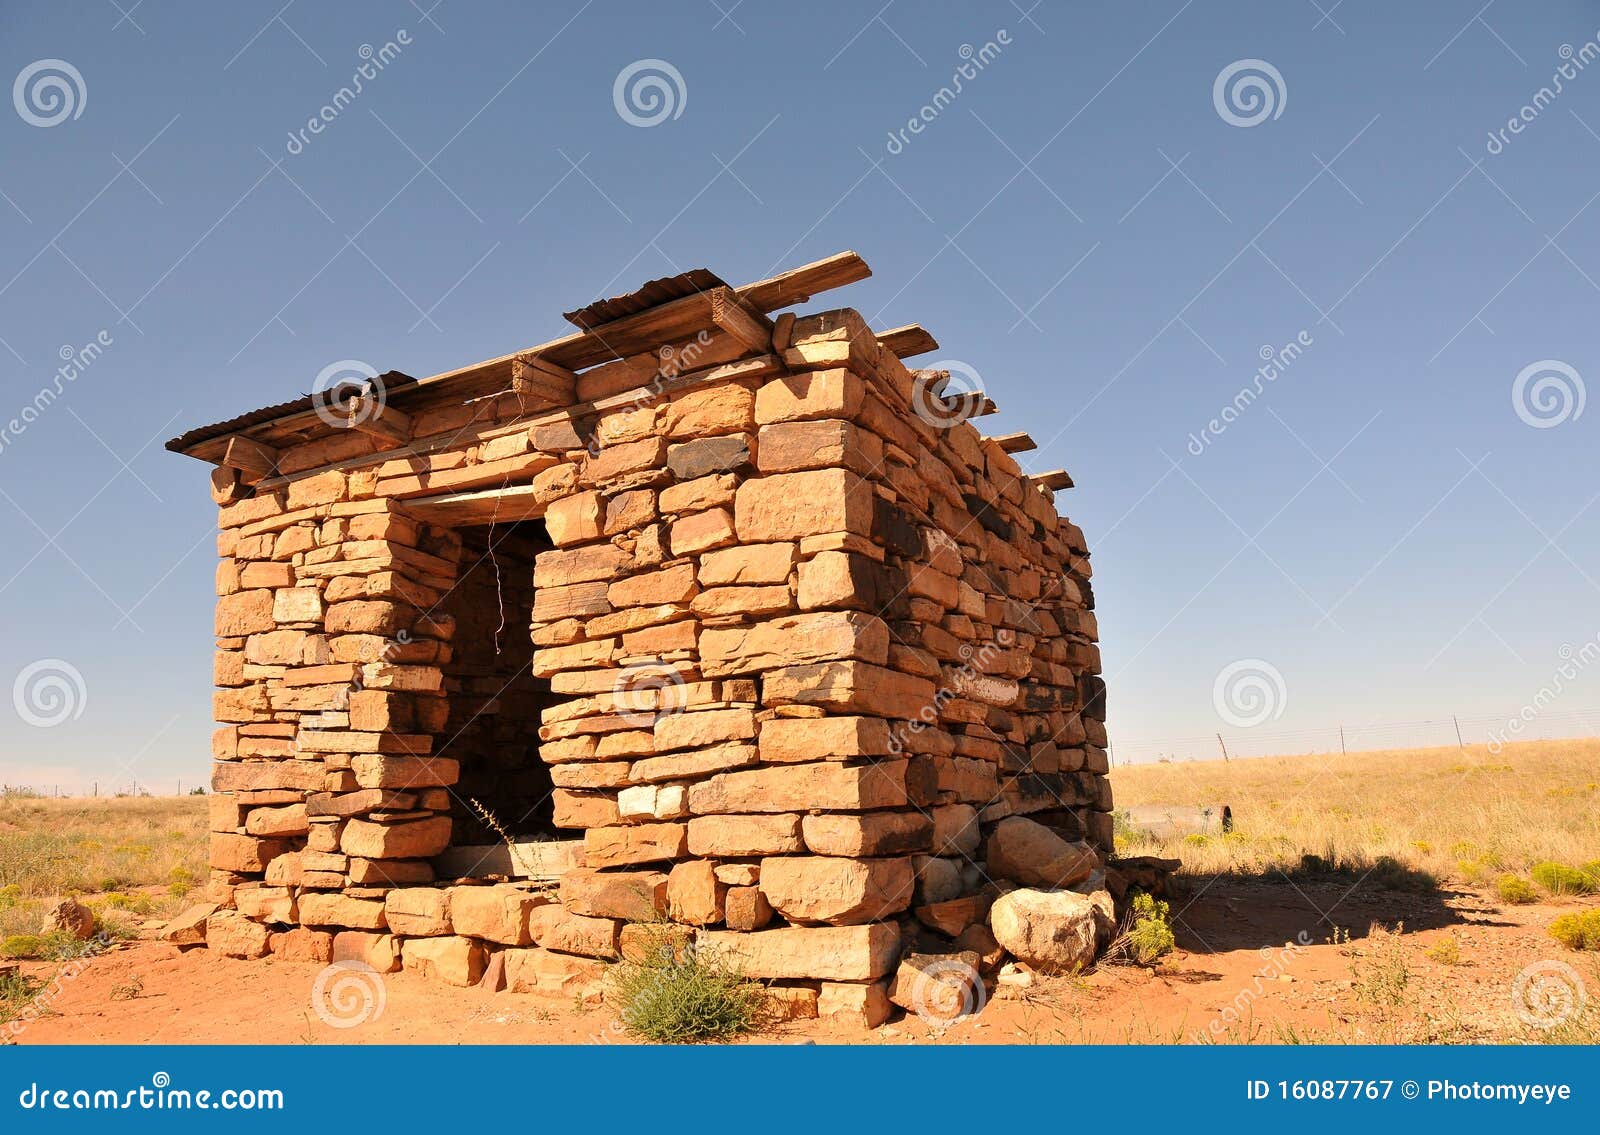 desert stone hut